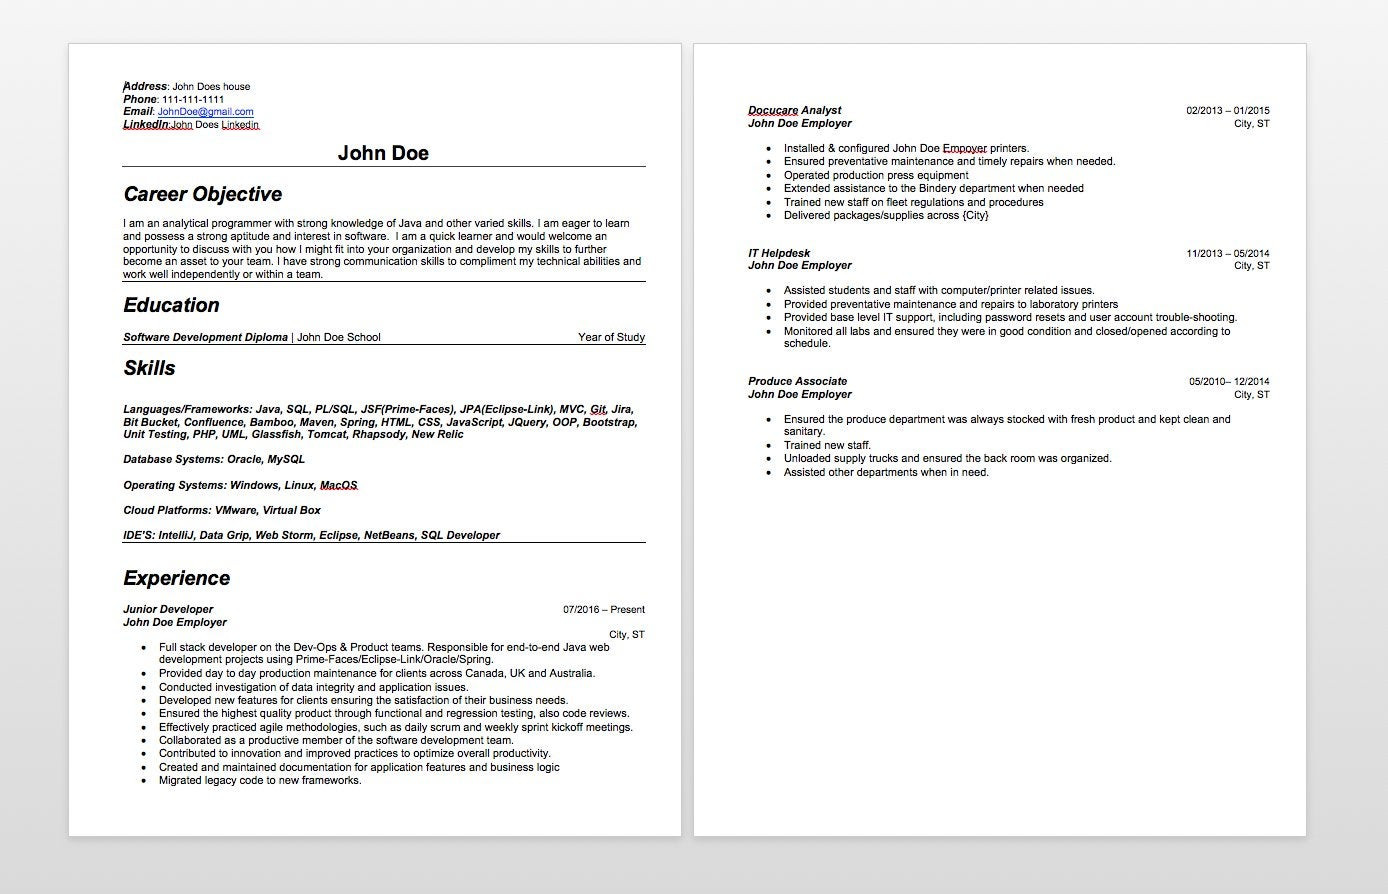 Junior Ios Developer Resume Sample Reddit Junior software Developer Resume Help : R/resumes